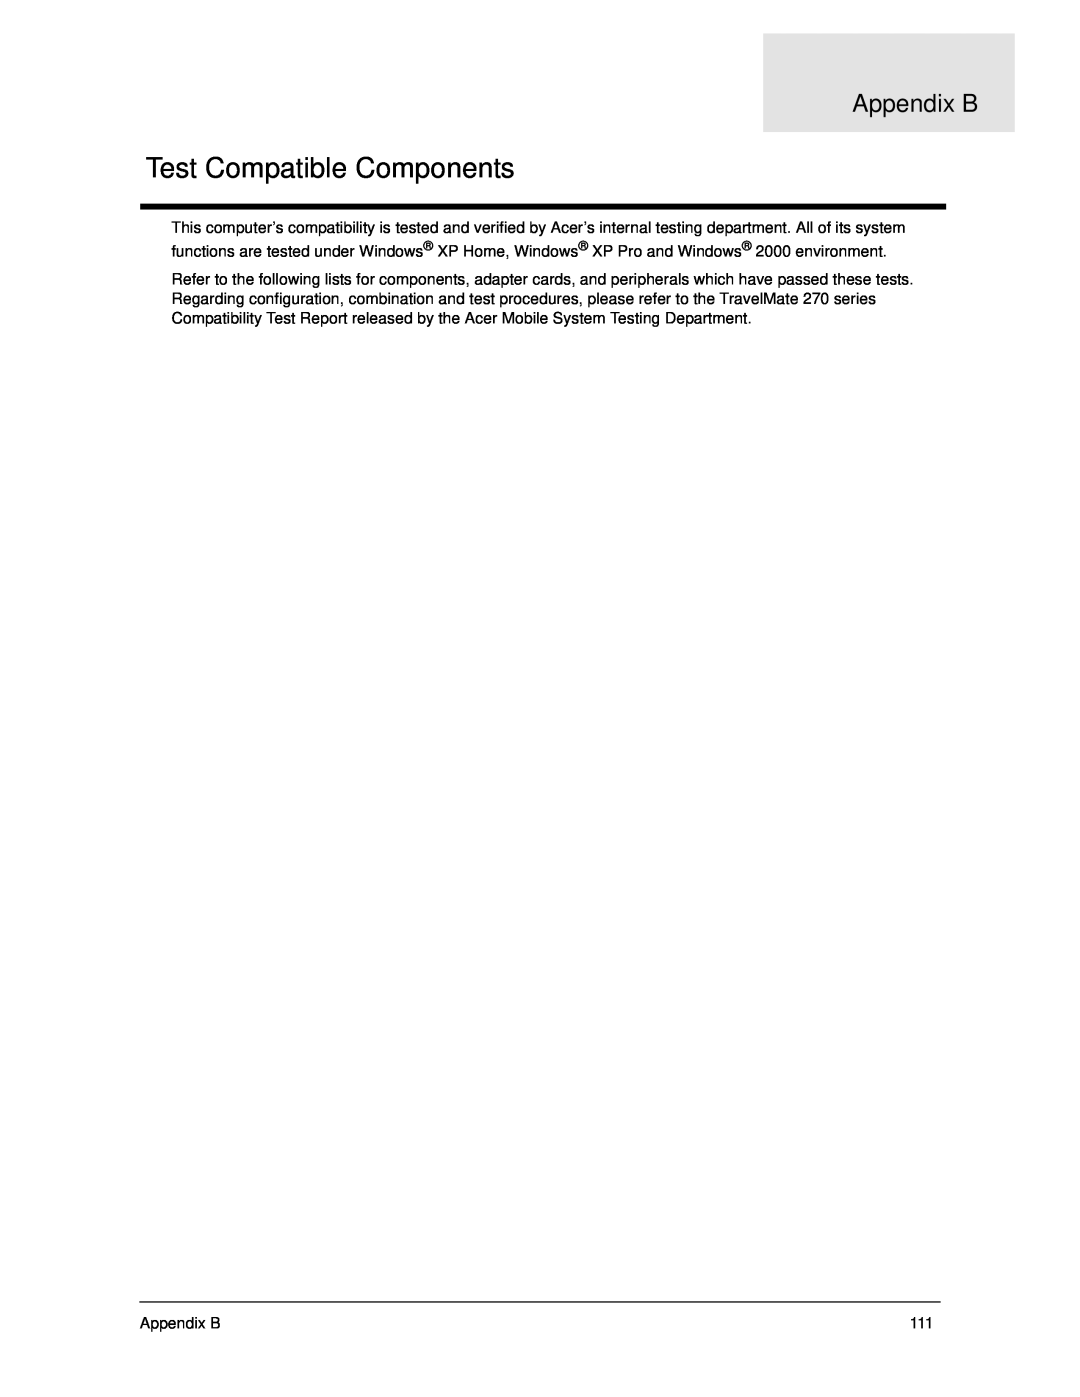 Acer 270 manual Test Compatible Components, Appendix B 